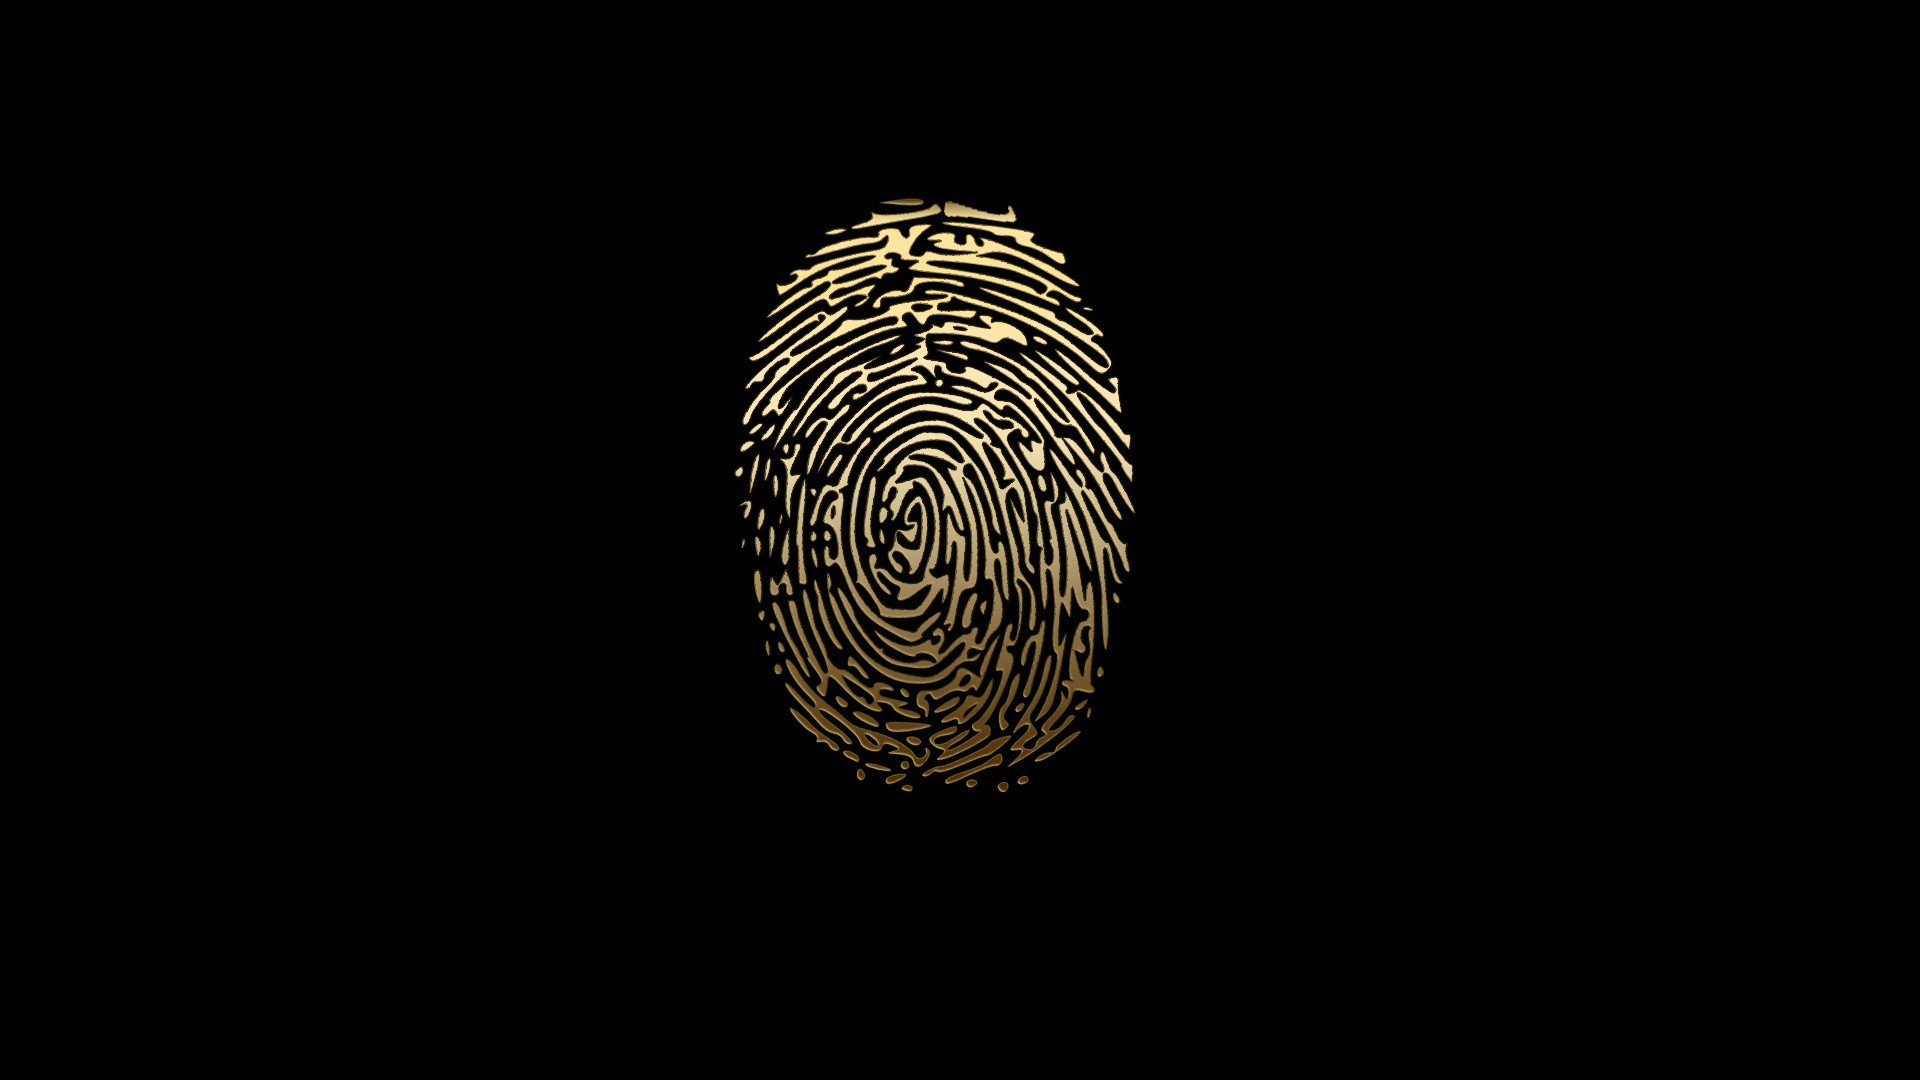 collobos fingerprint download